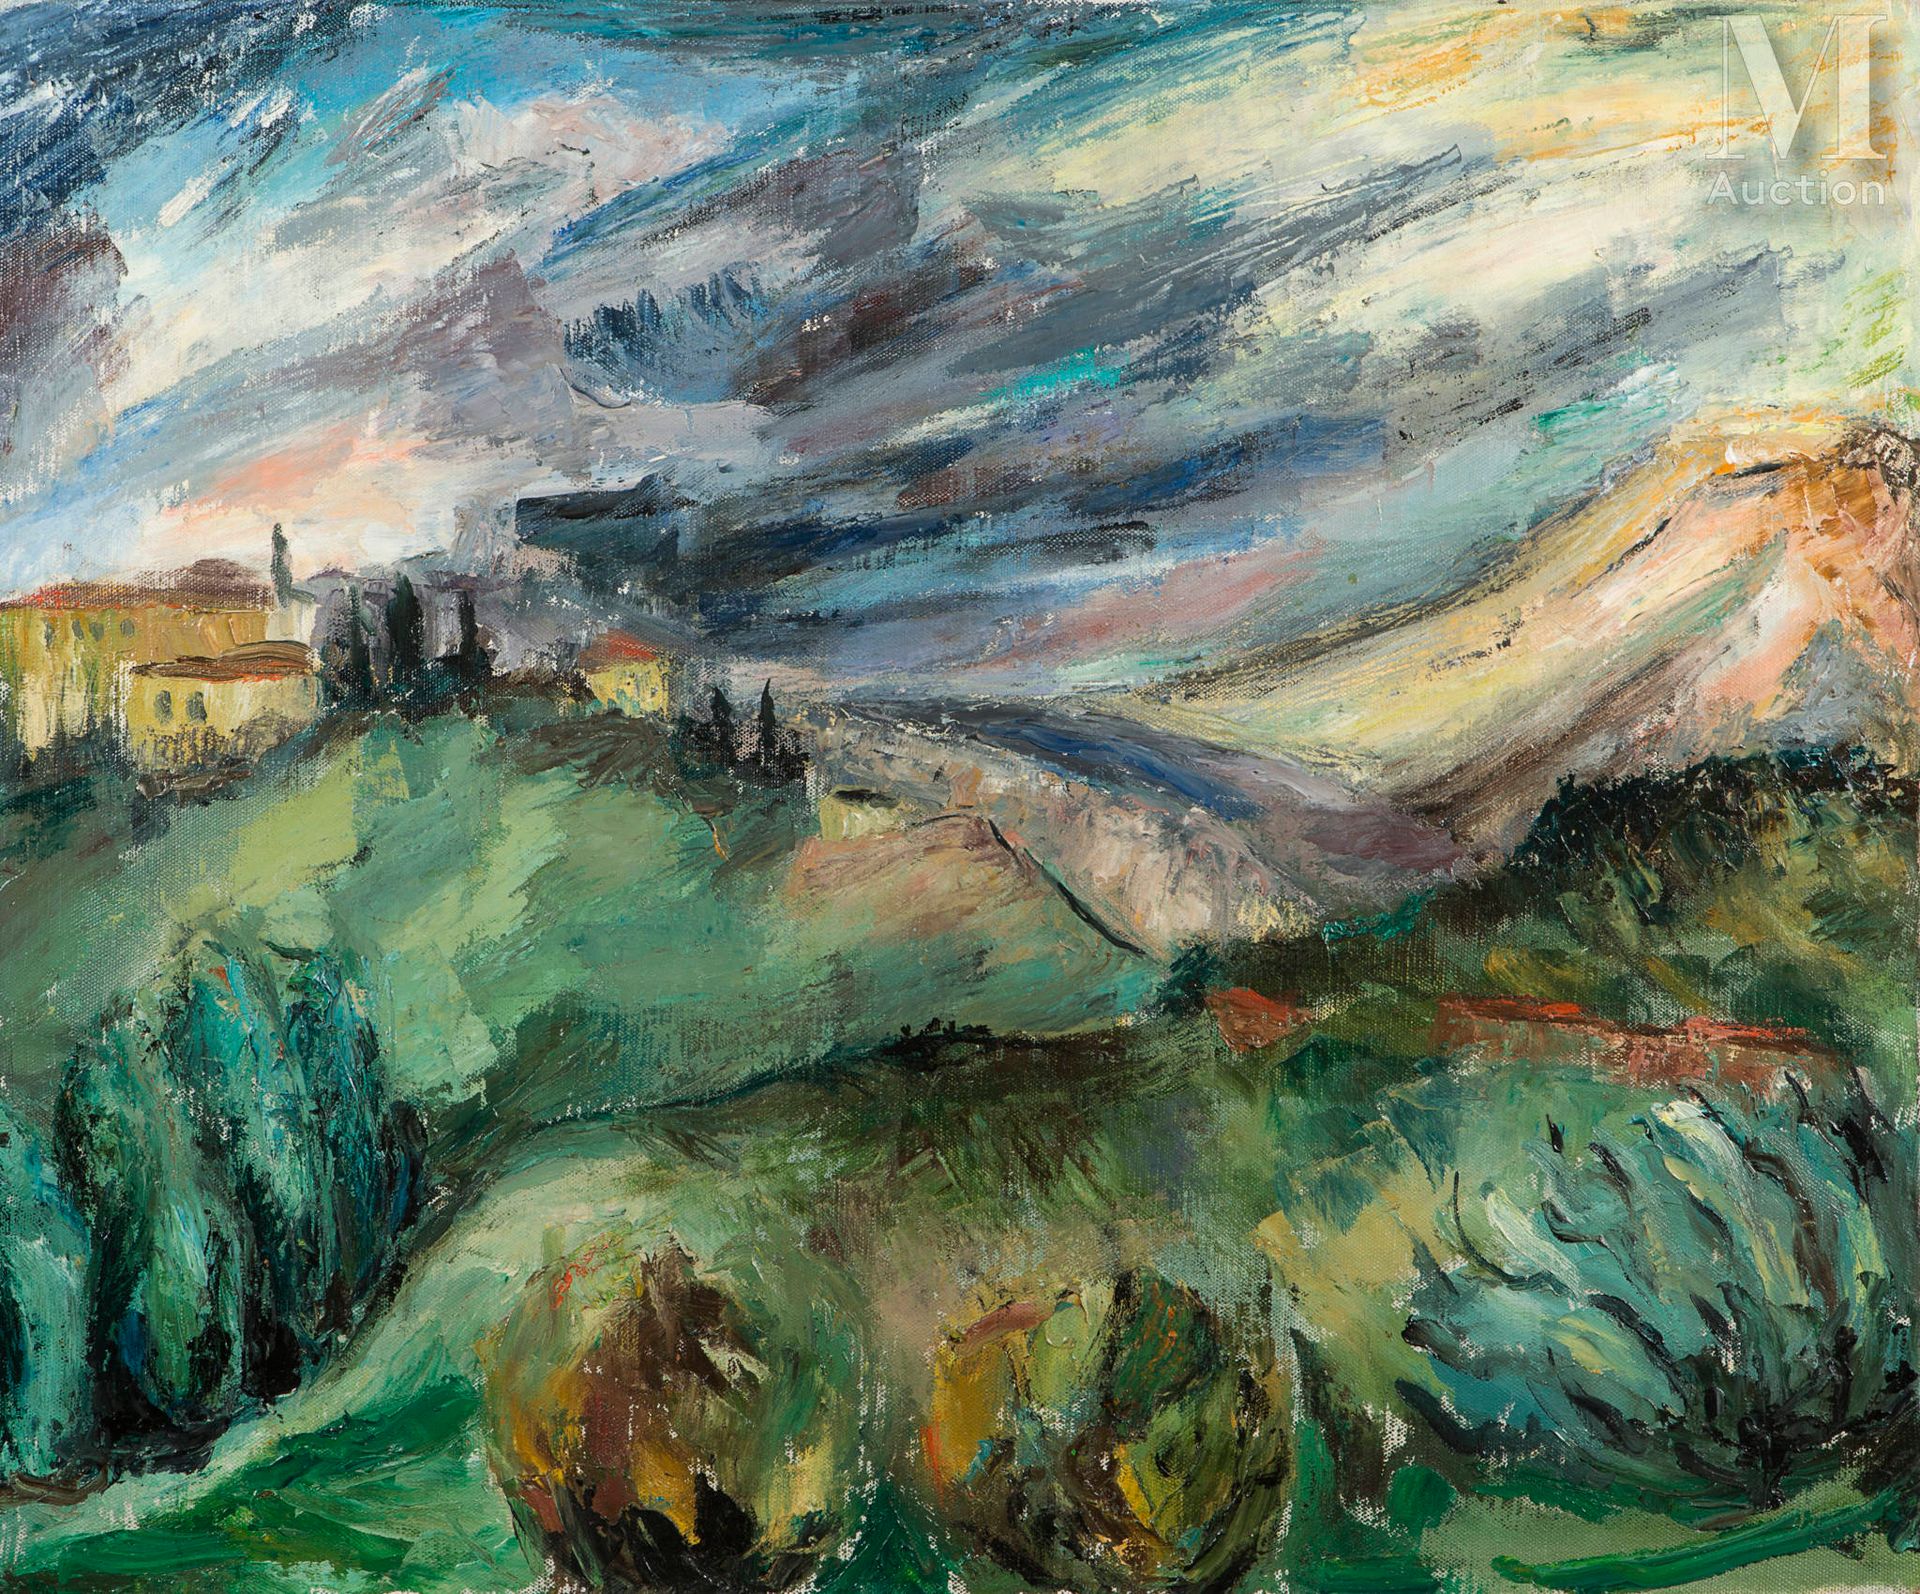 Lou ALBERT- LASARD (Metz 1885 - Paris 1969) 景观与丘陵

原创布面油画 
54 x 65厘米
无符号
框架上印有7号&hellip;